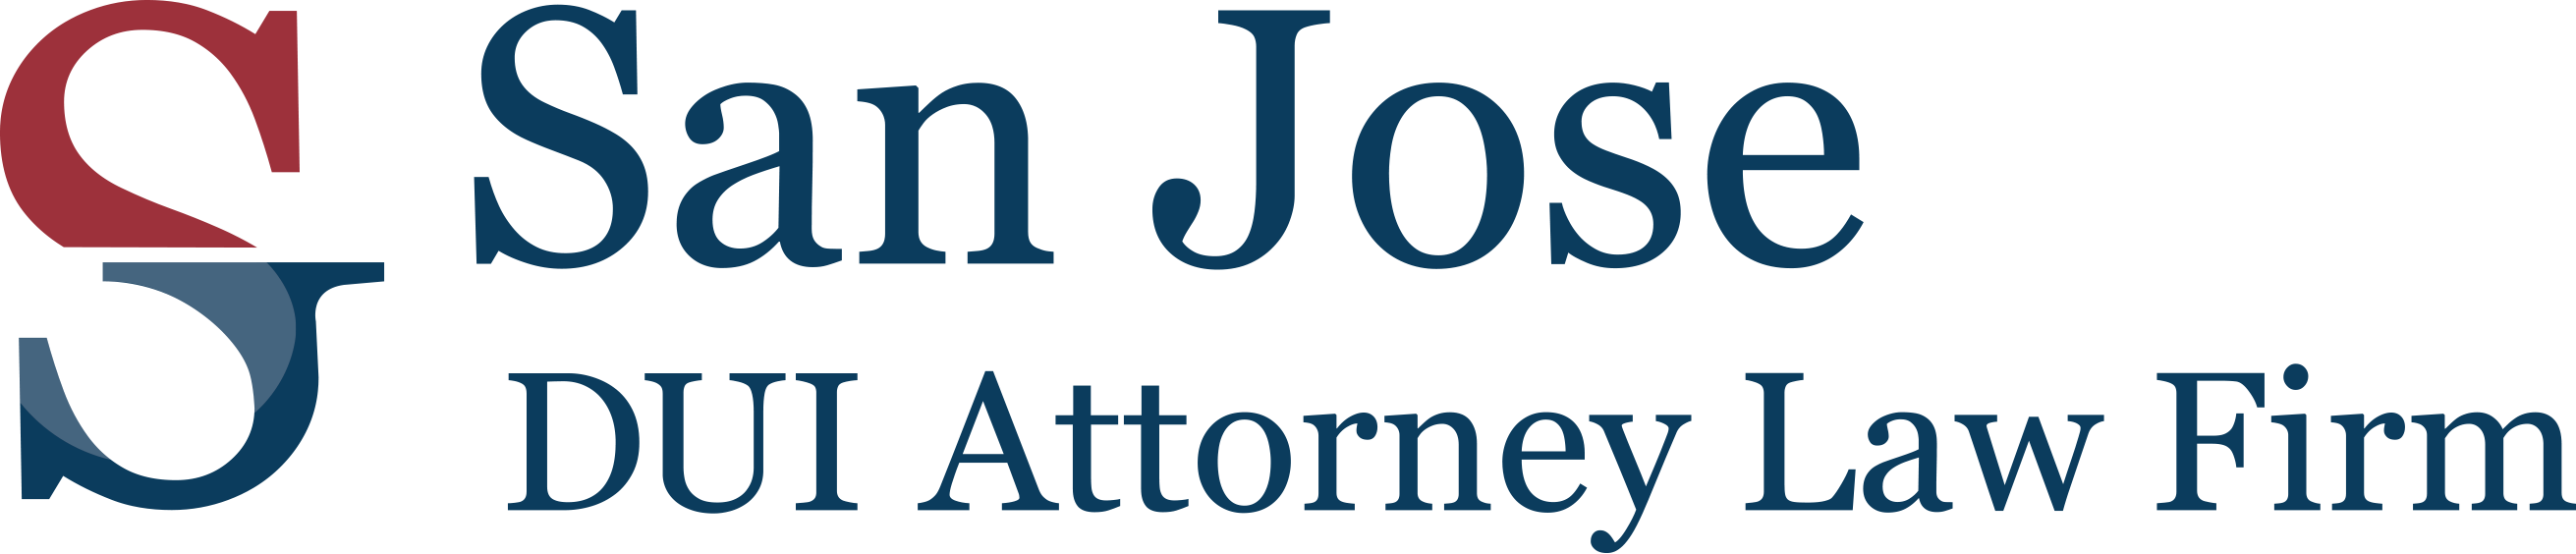 San Jose DUI Attorney Law Firm logo